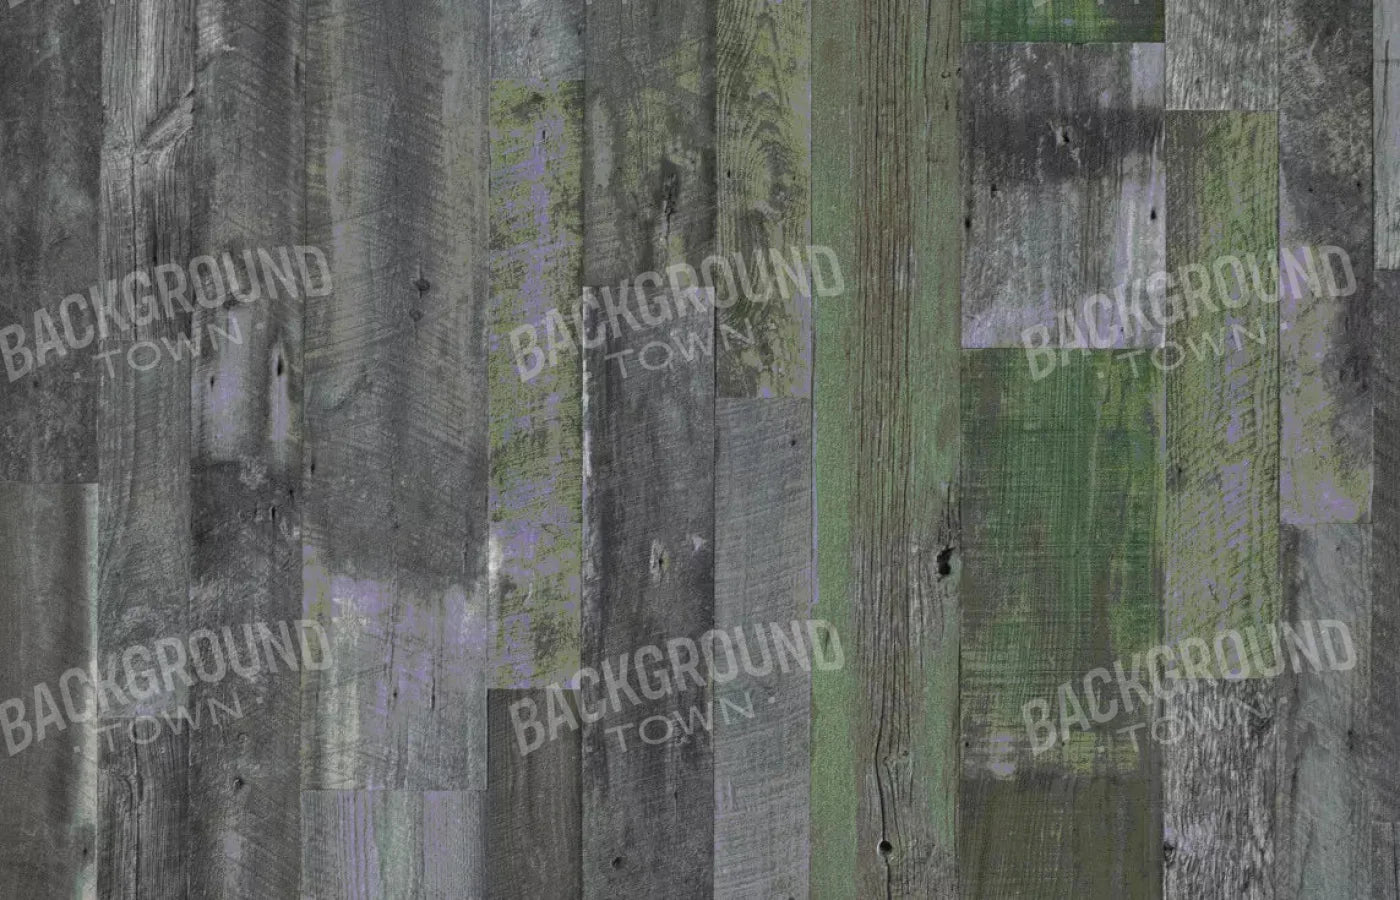 Evergreen 12X8 Ultracloth ( 144 X 96 Inch ) Backdrop